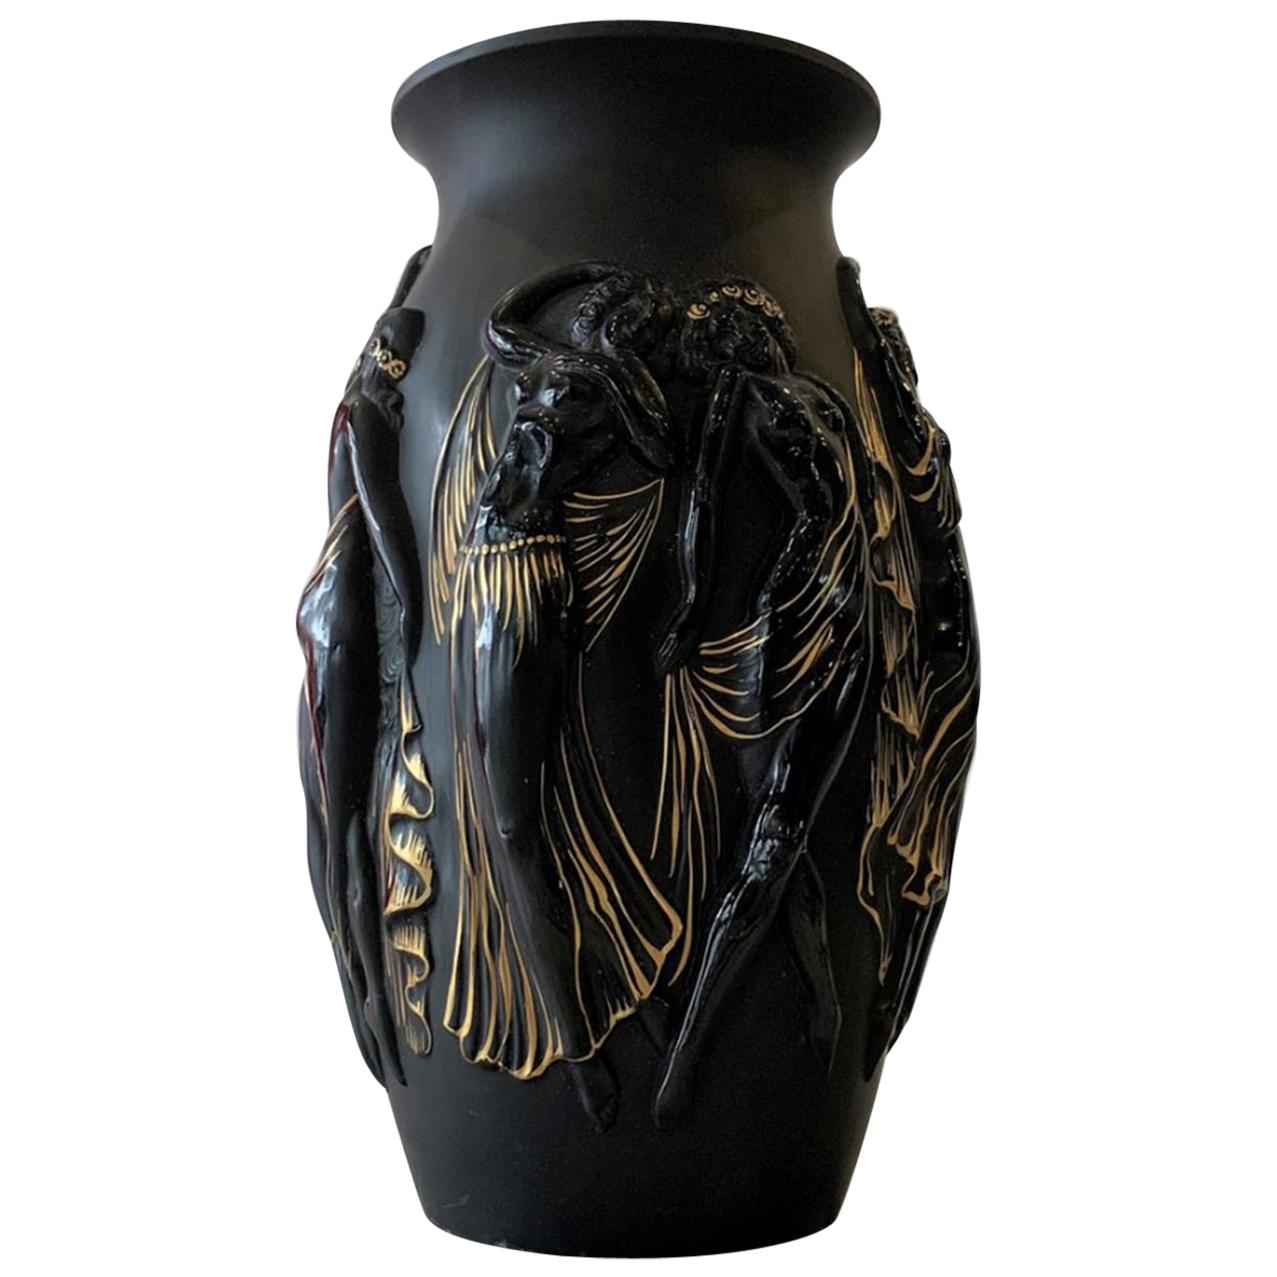 Sabino Black Vase "La Gaieté" For Sale at 1stDibs